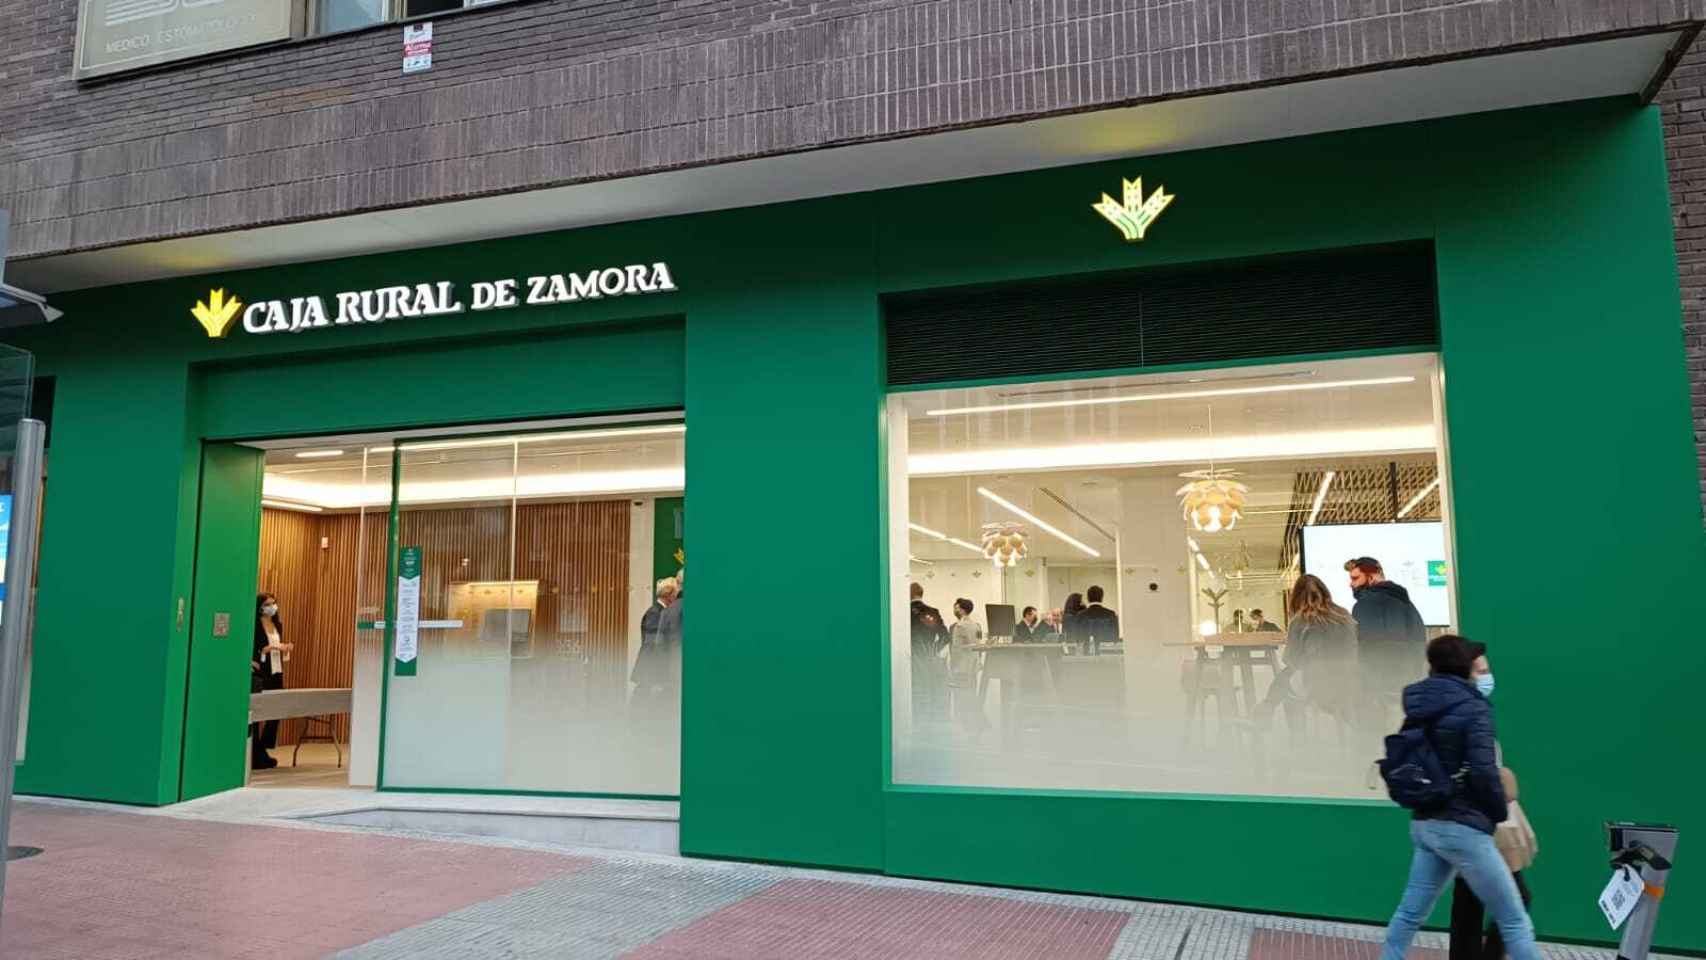 Oficina Caja Rural de Zamora en Madrid